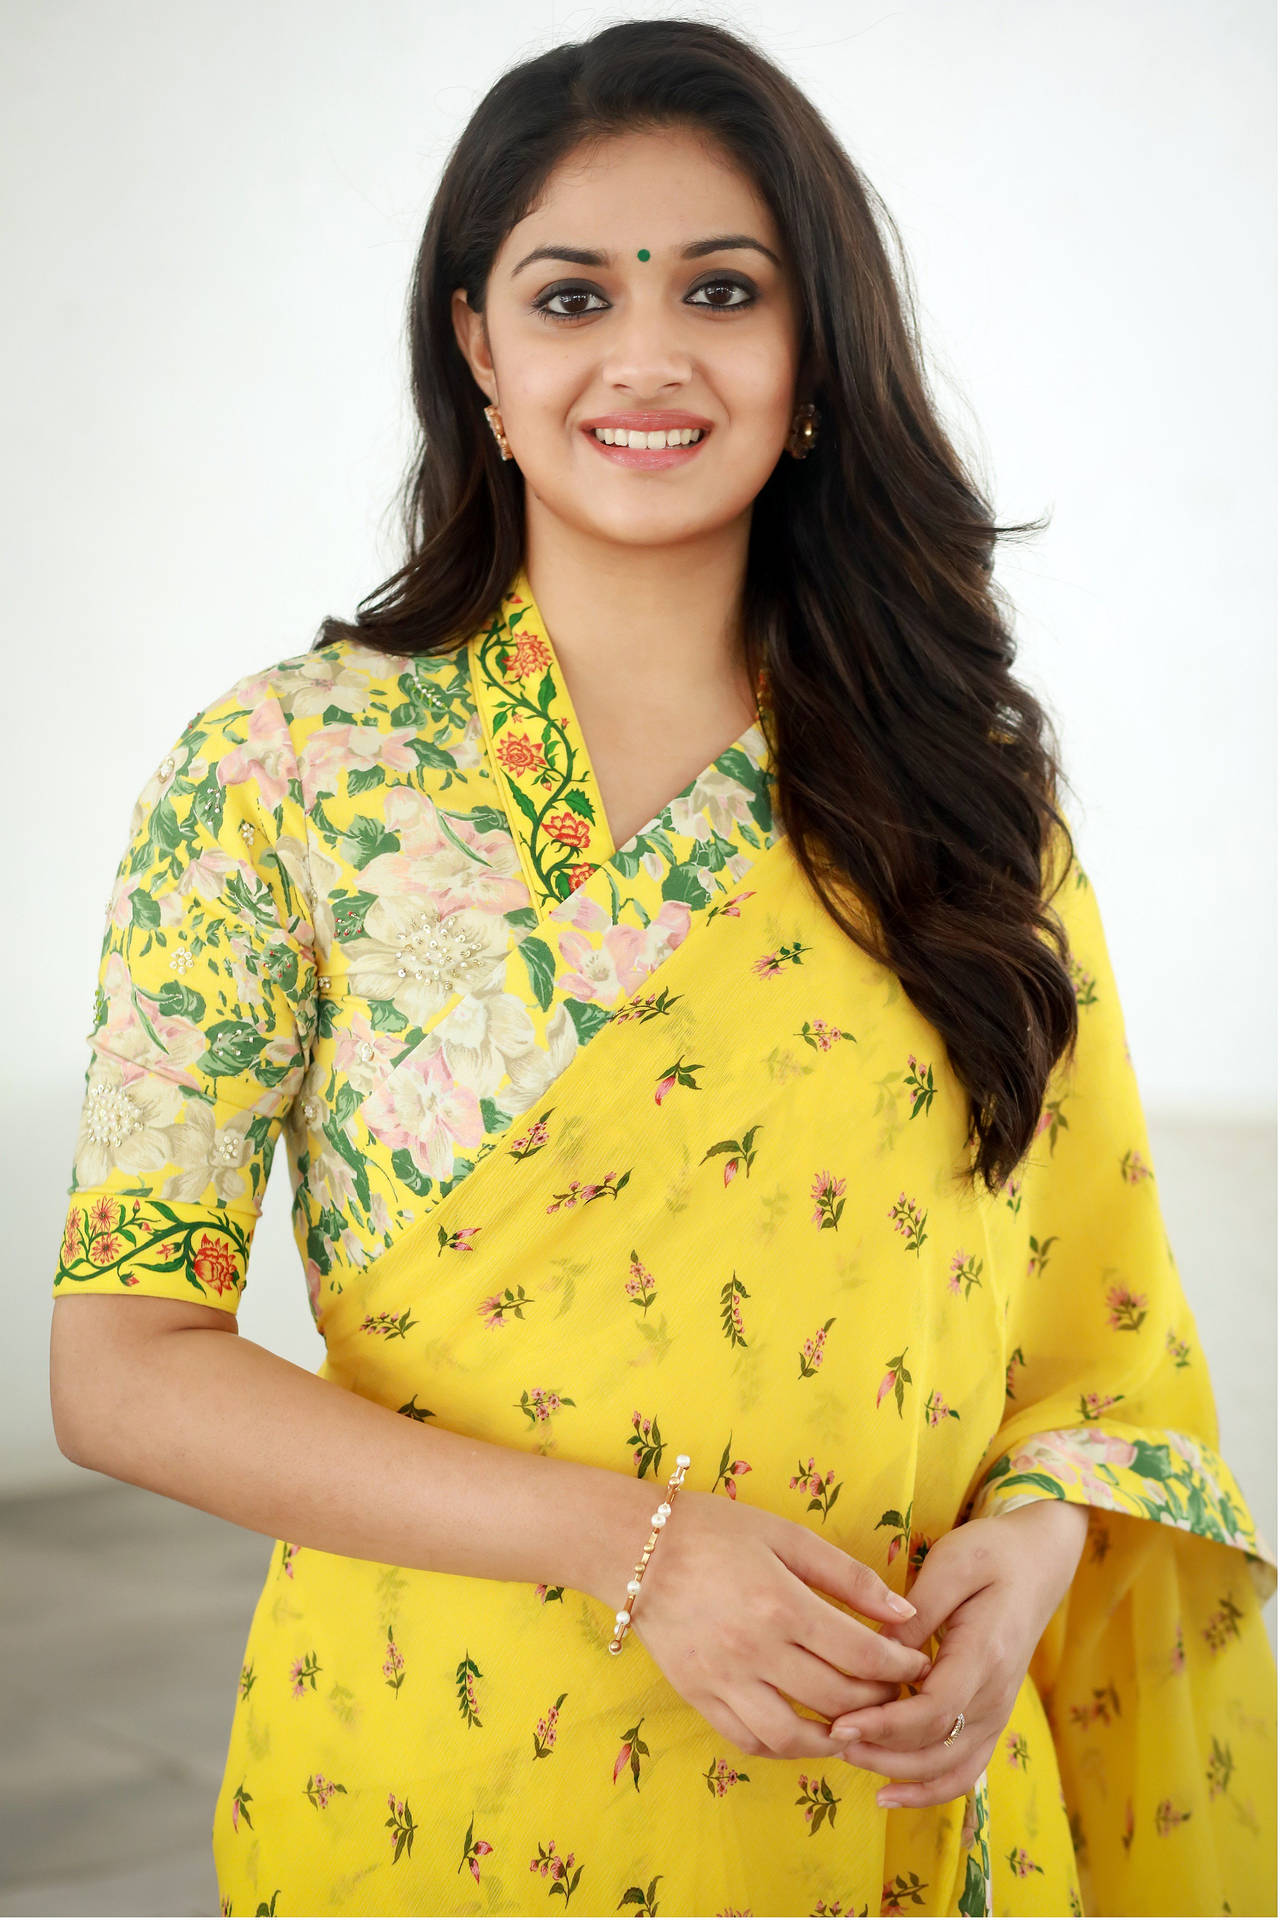 Vibrant Elegance - Keerthi Suresh in a Stunning Yellow Floral Saree Wallpaper